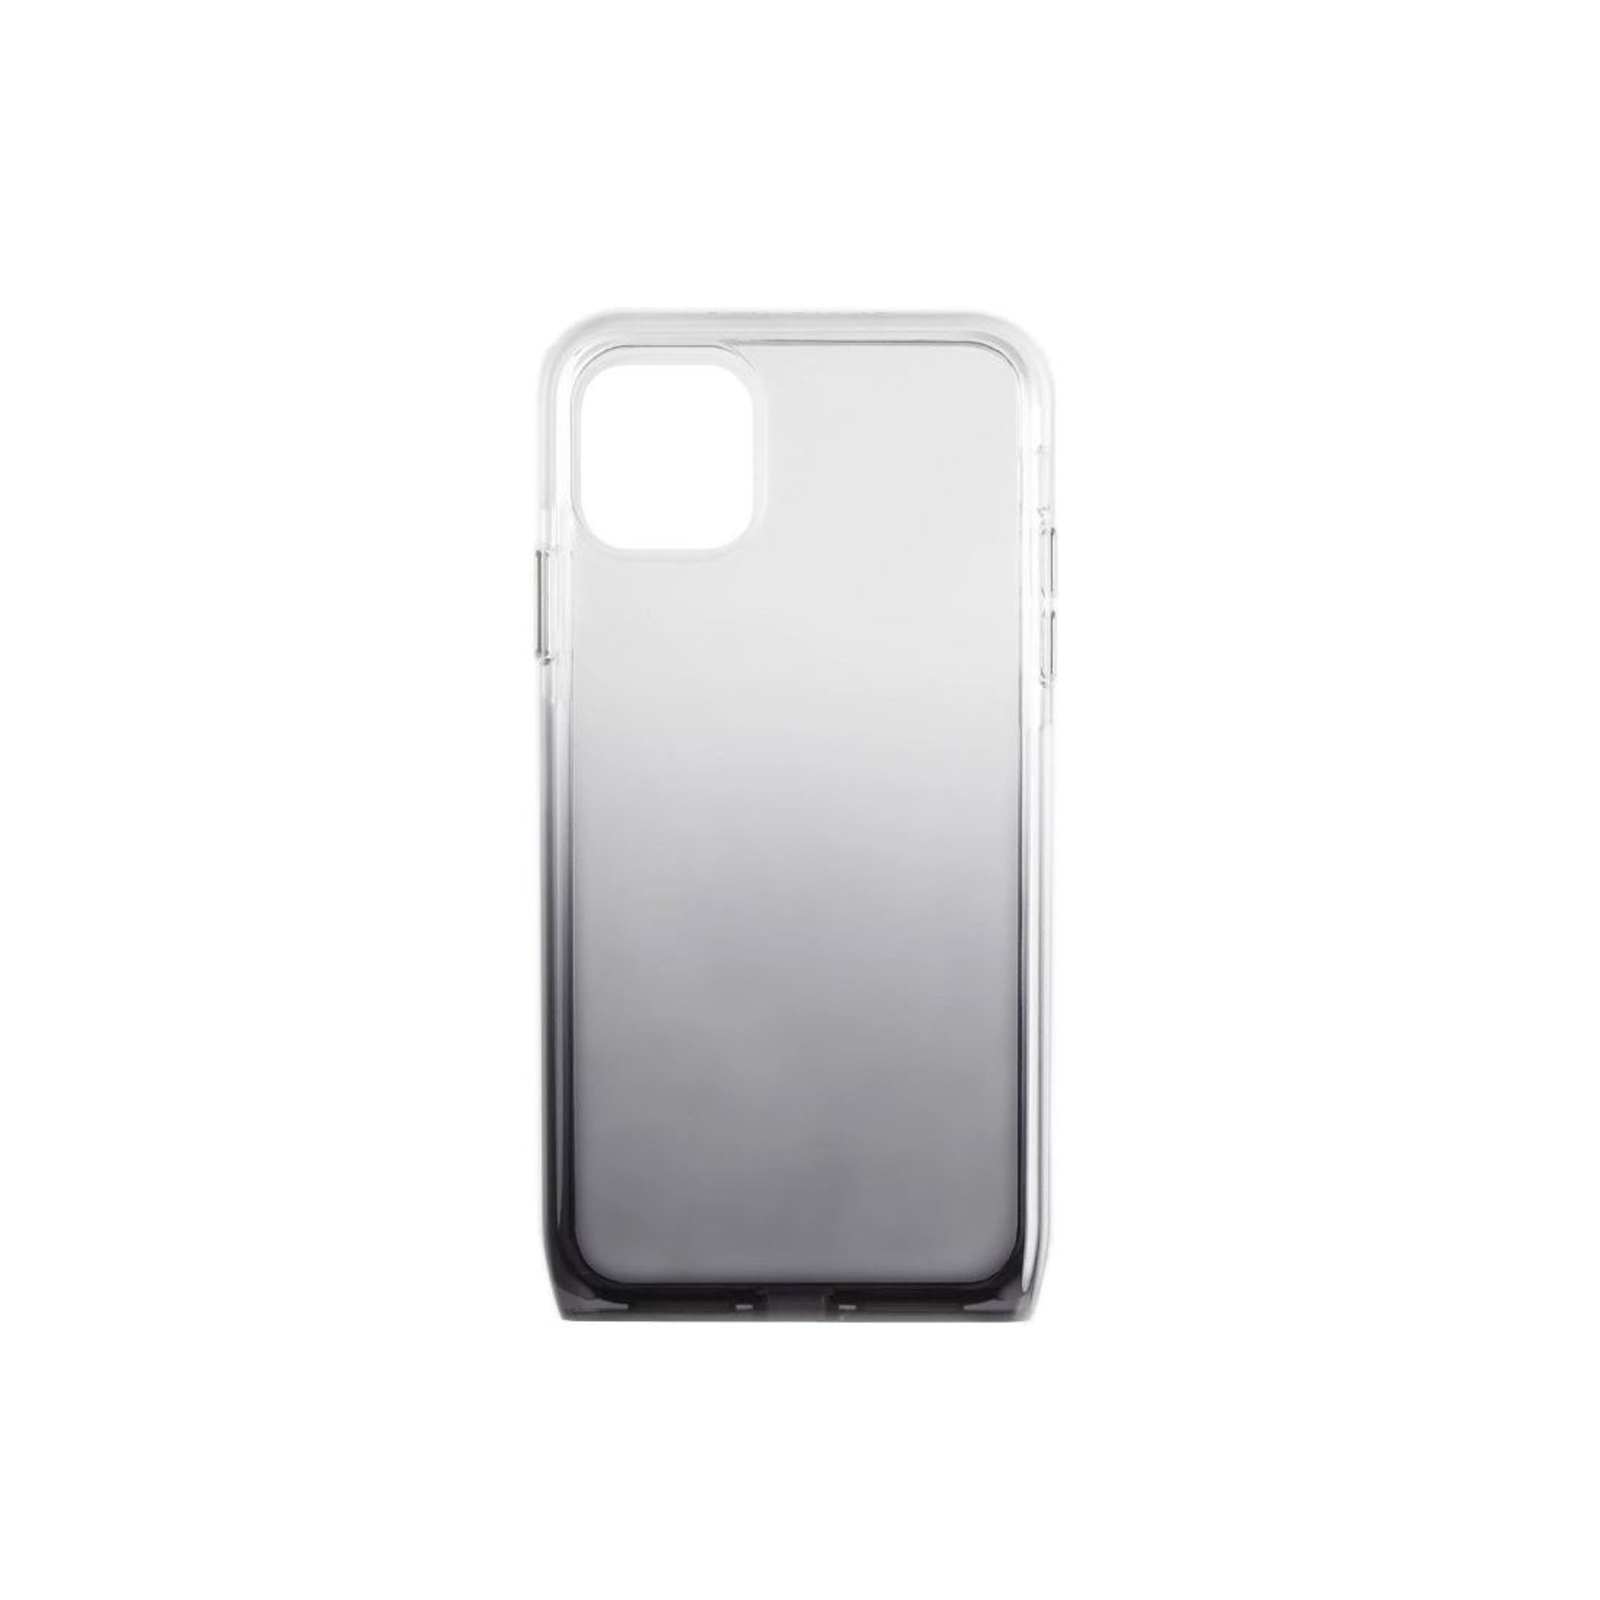 BodyGuardz Harmony iPhone 11 Pro Max Clear/Black Case [Brand New]